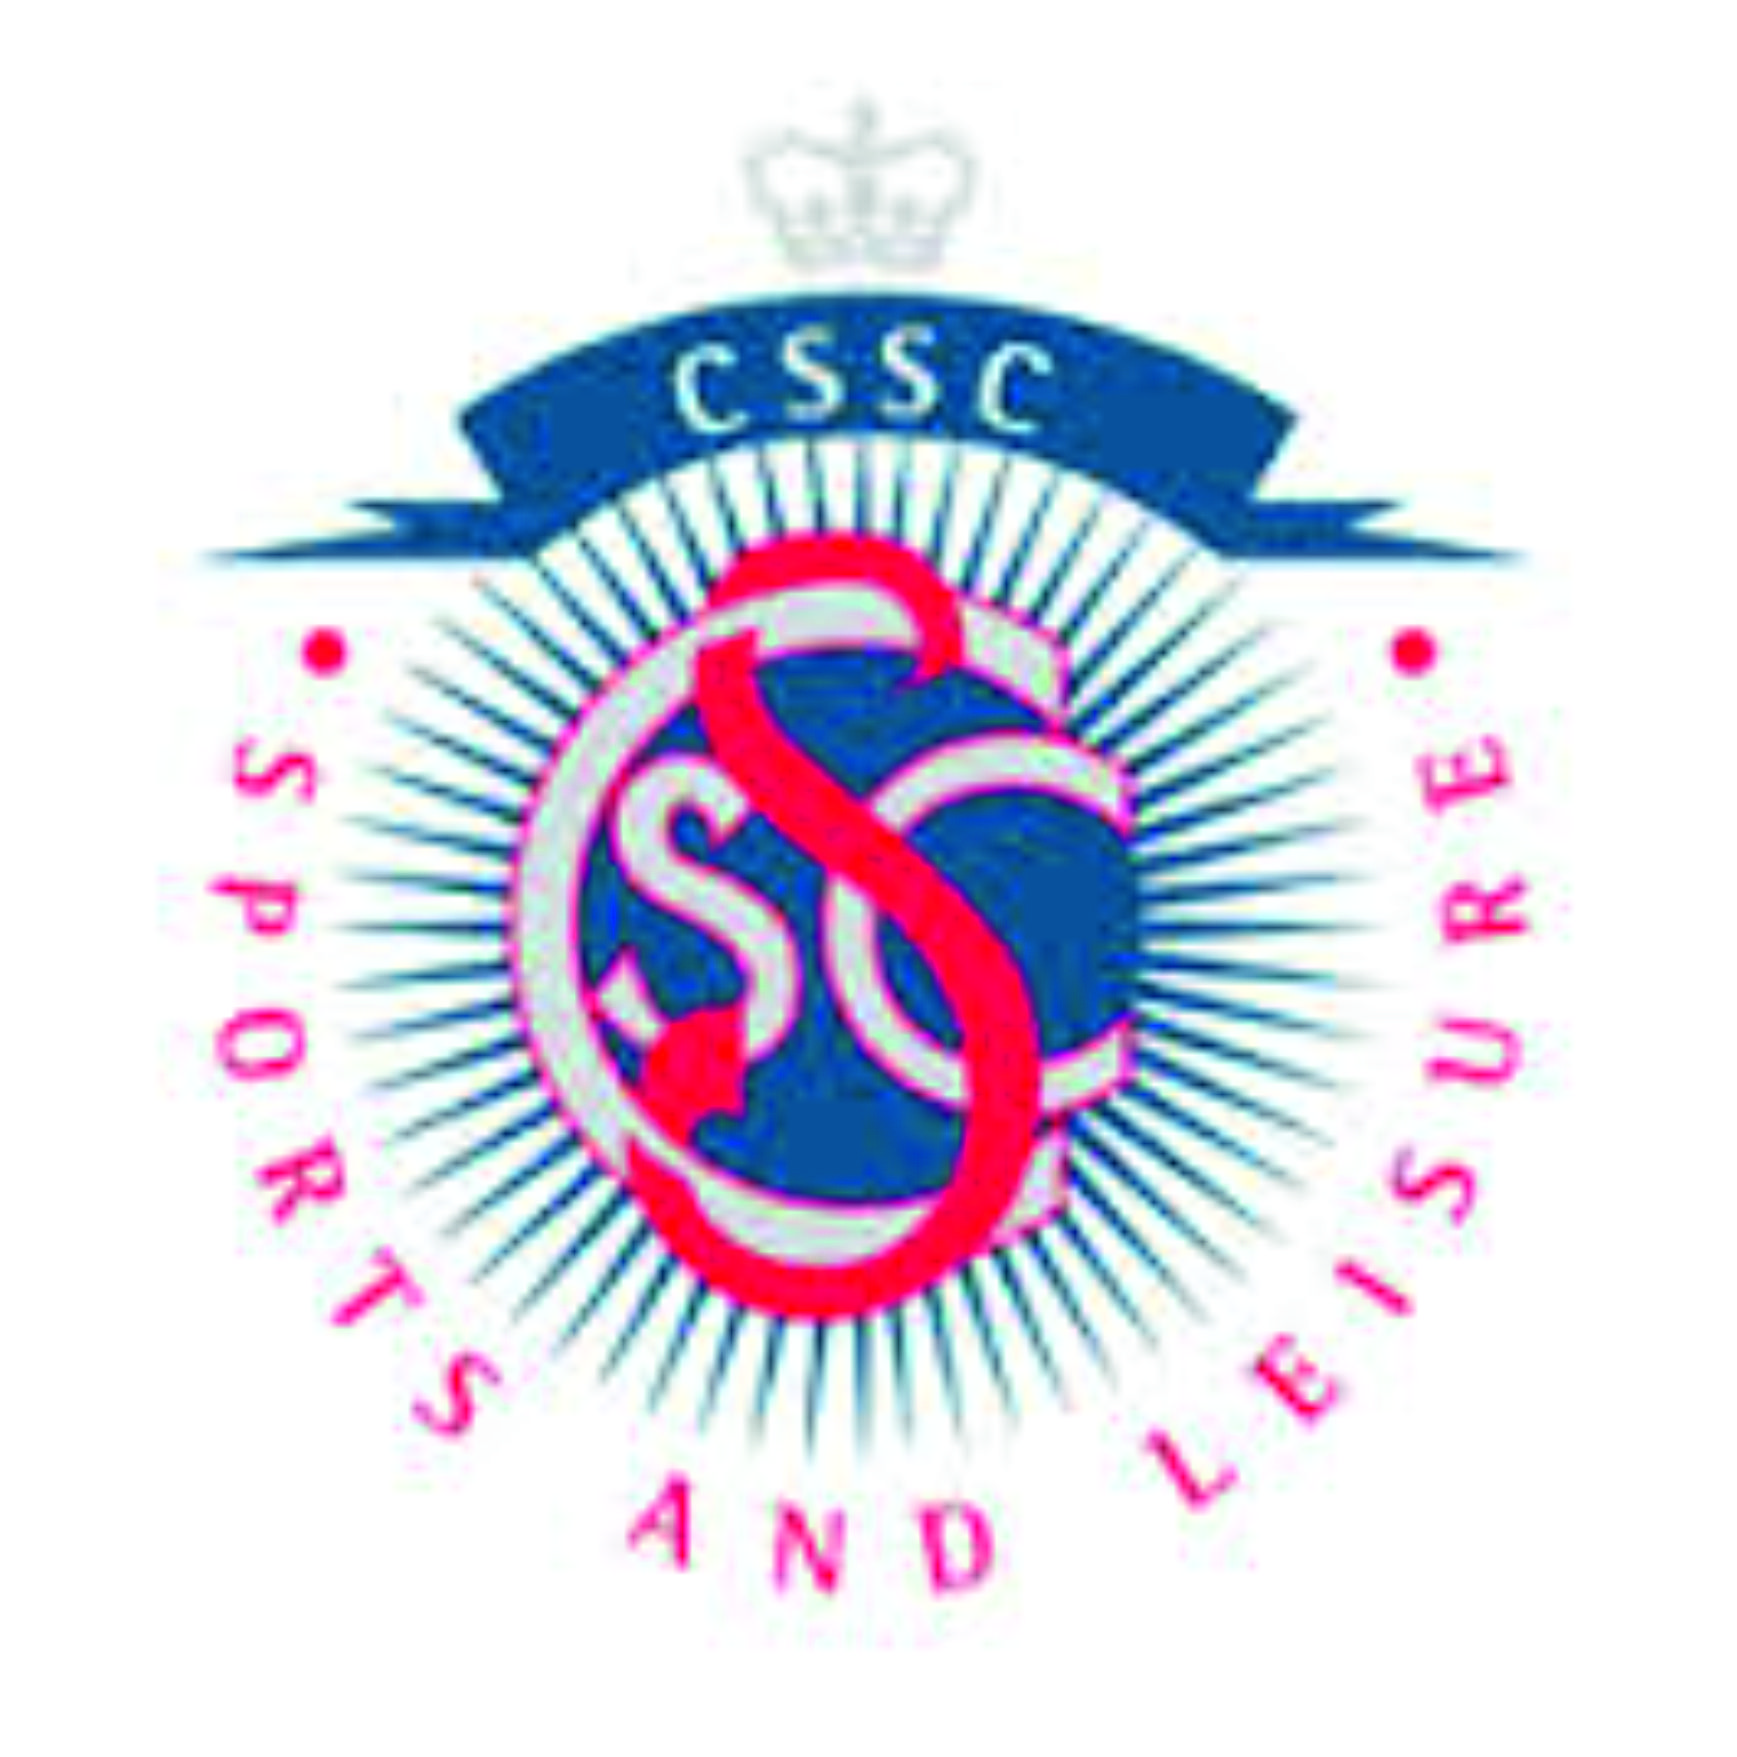 York Civil Service CC